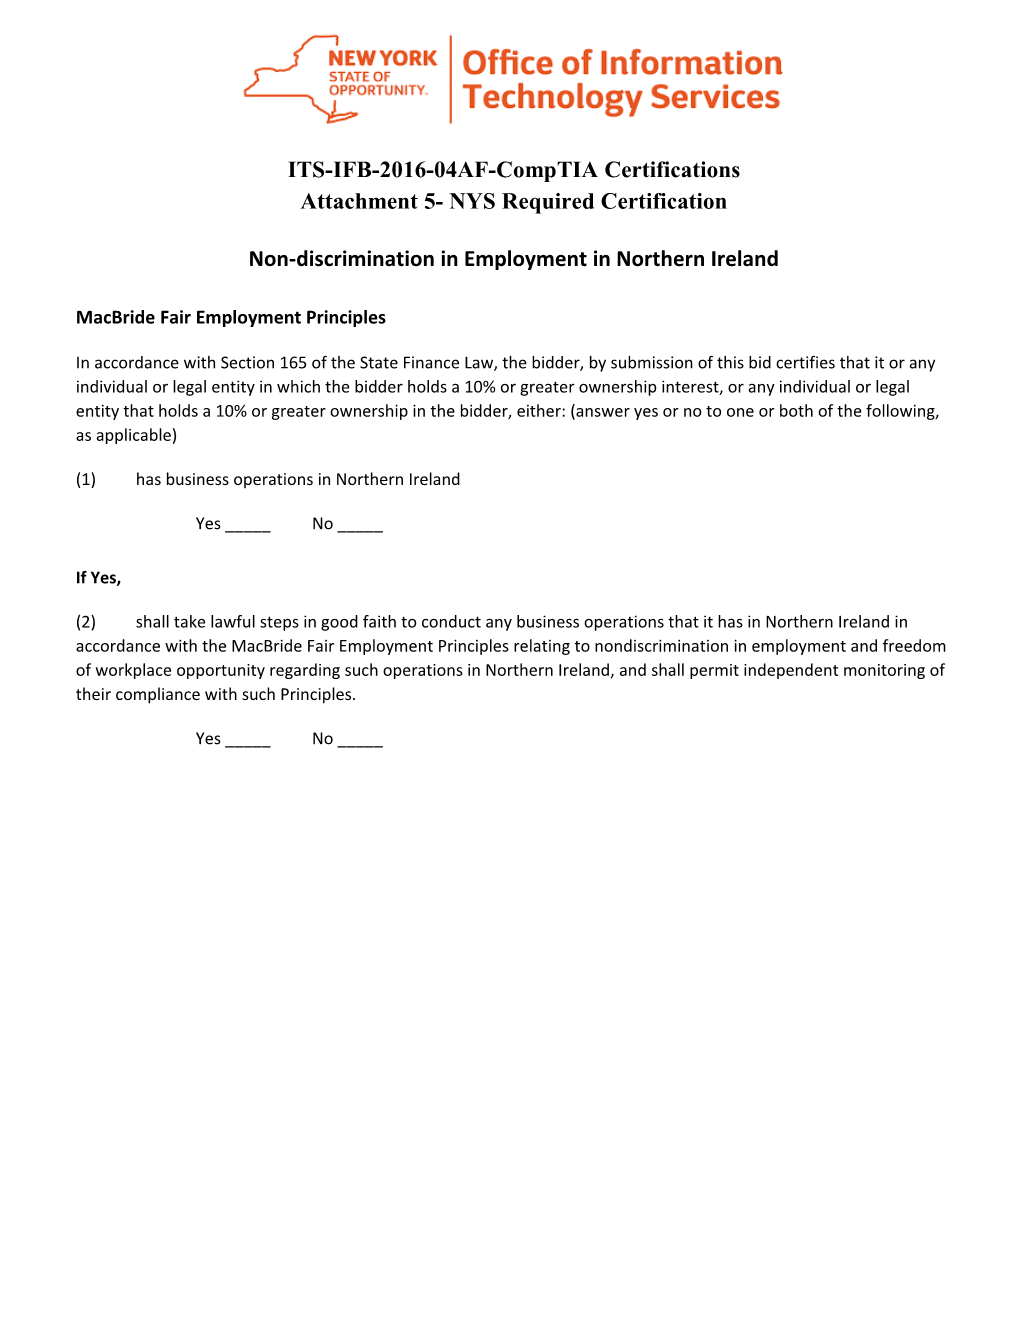 ITS-IFB-2016-04AF-Comptia Certifications